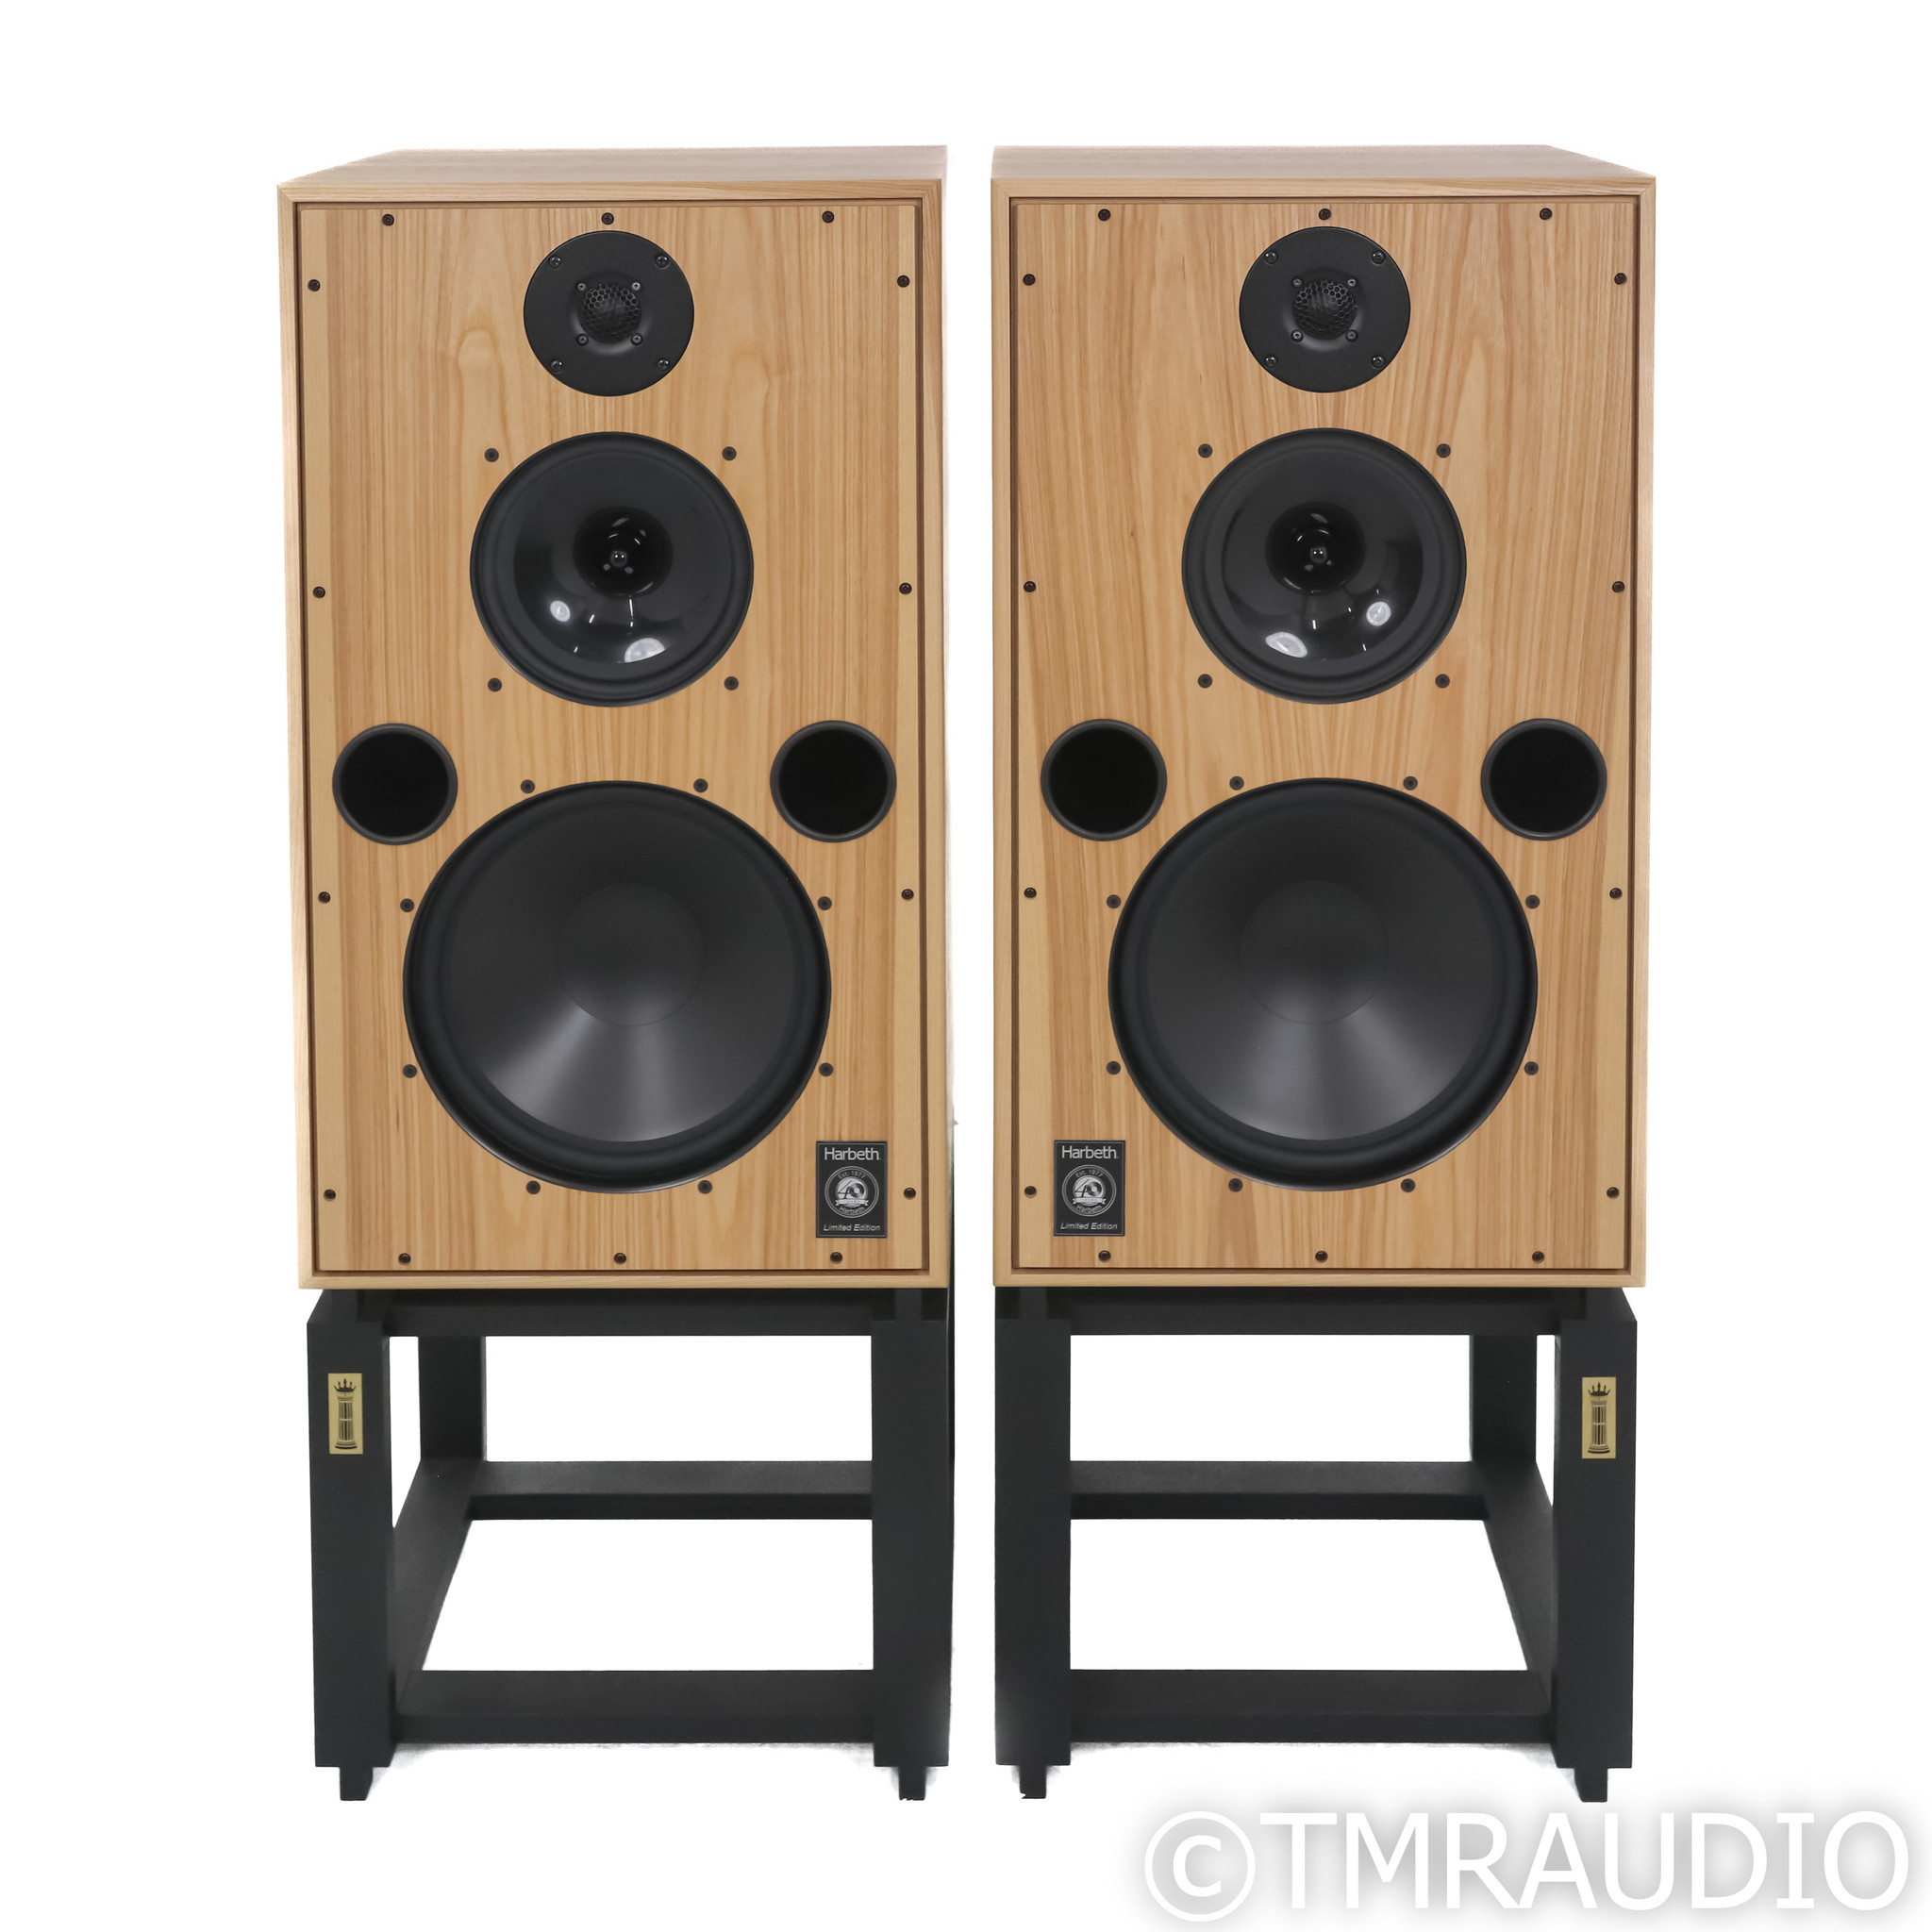 Speaker Stands - Quadraspire Limited